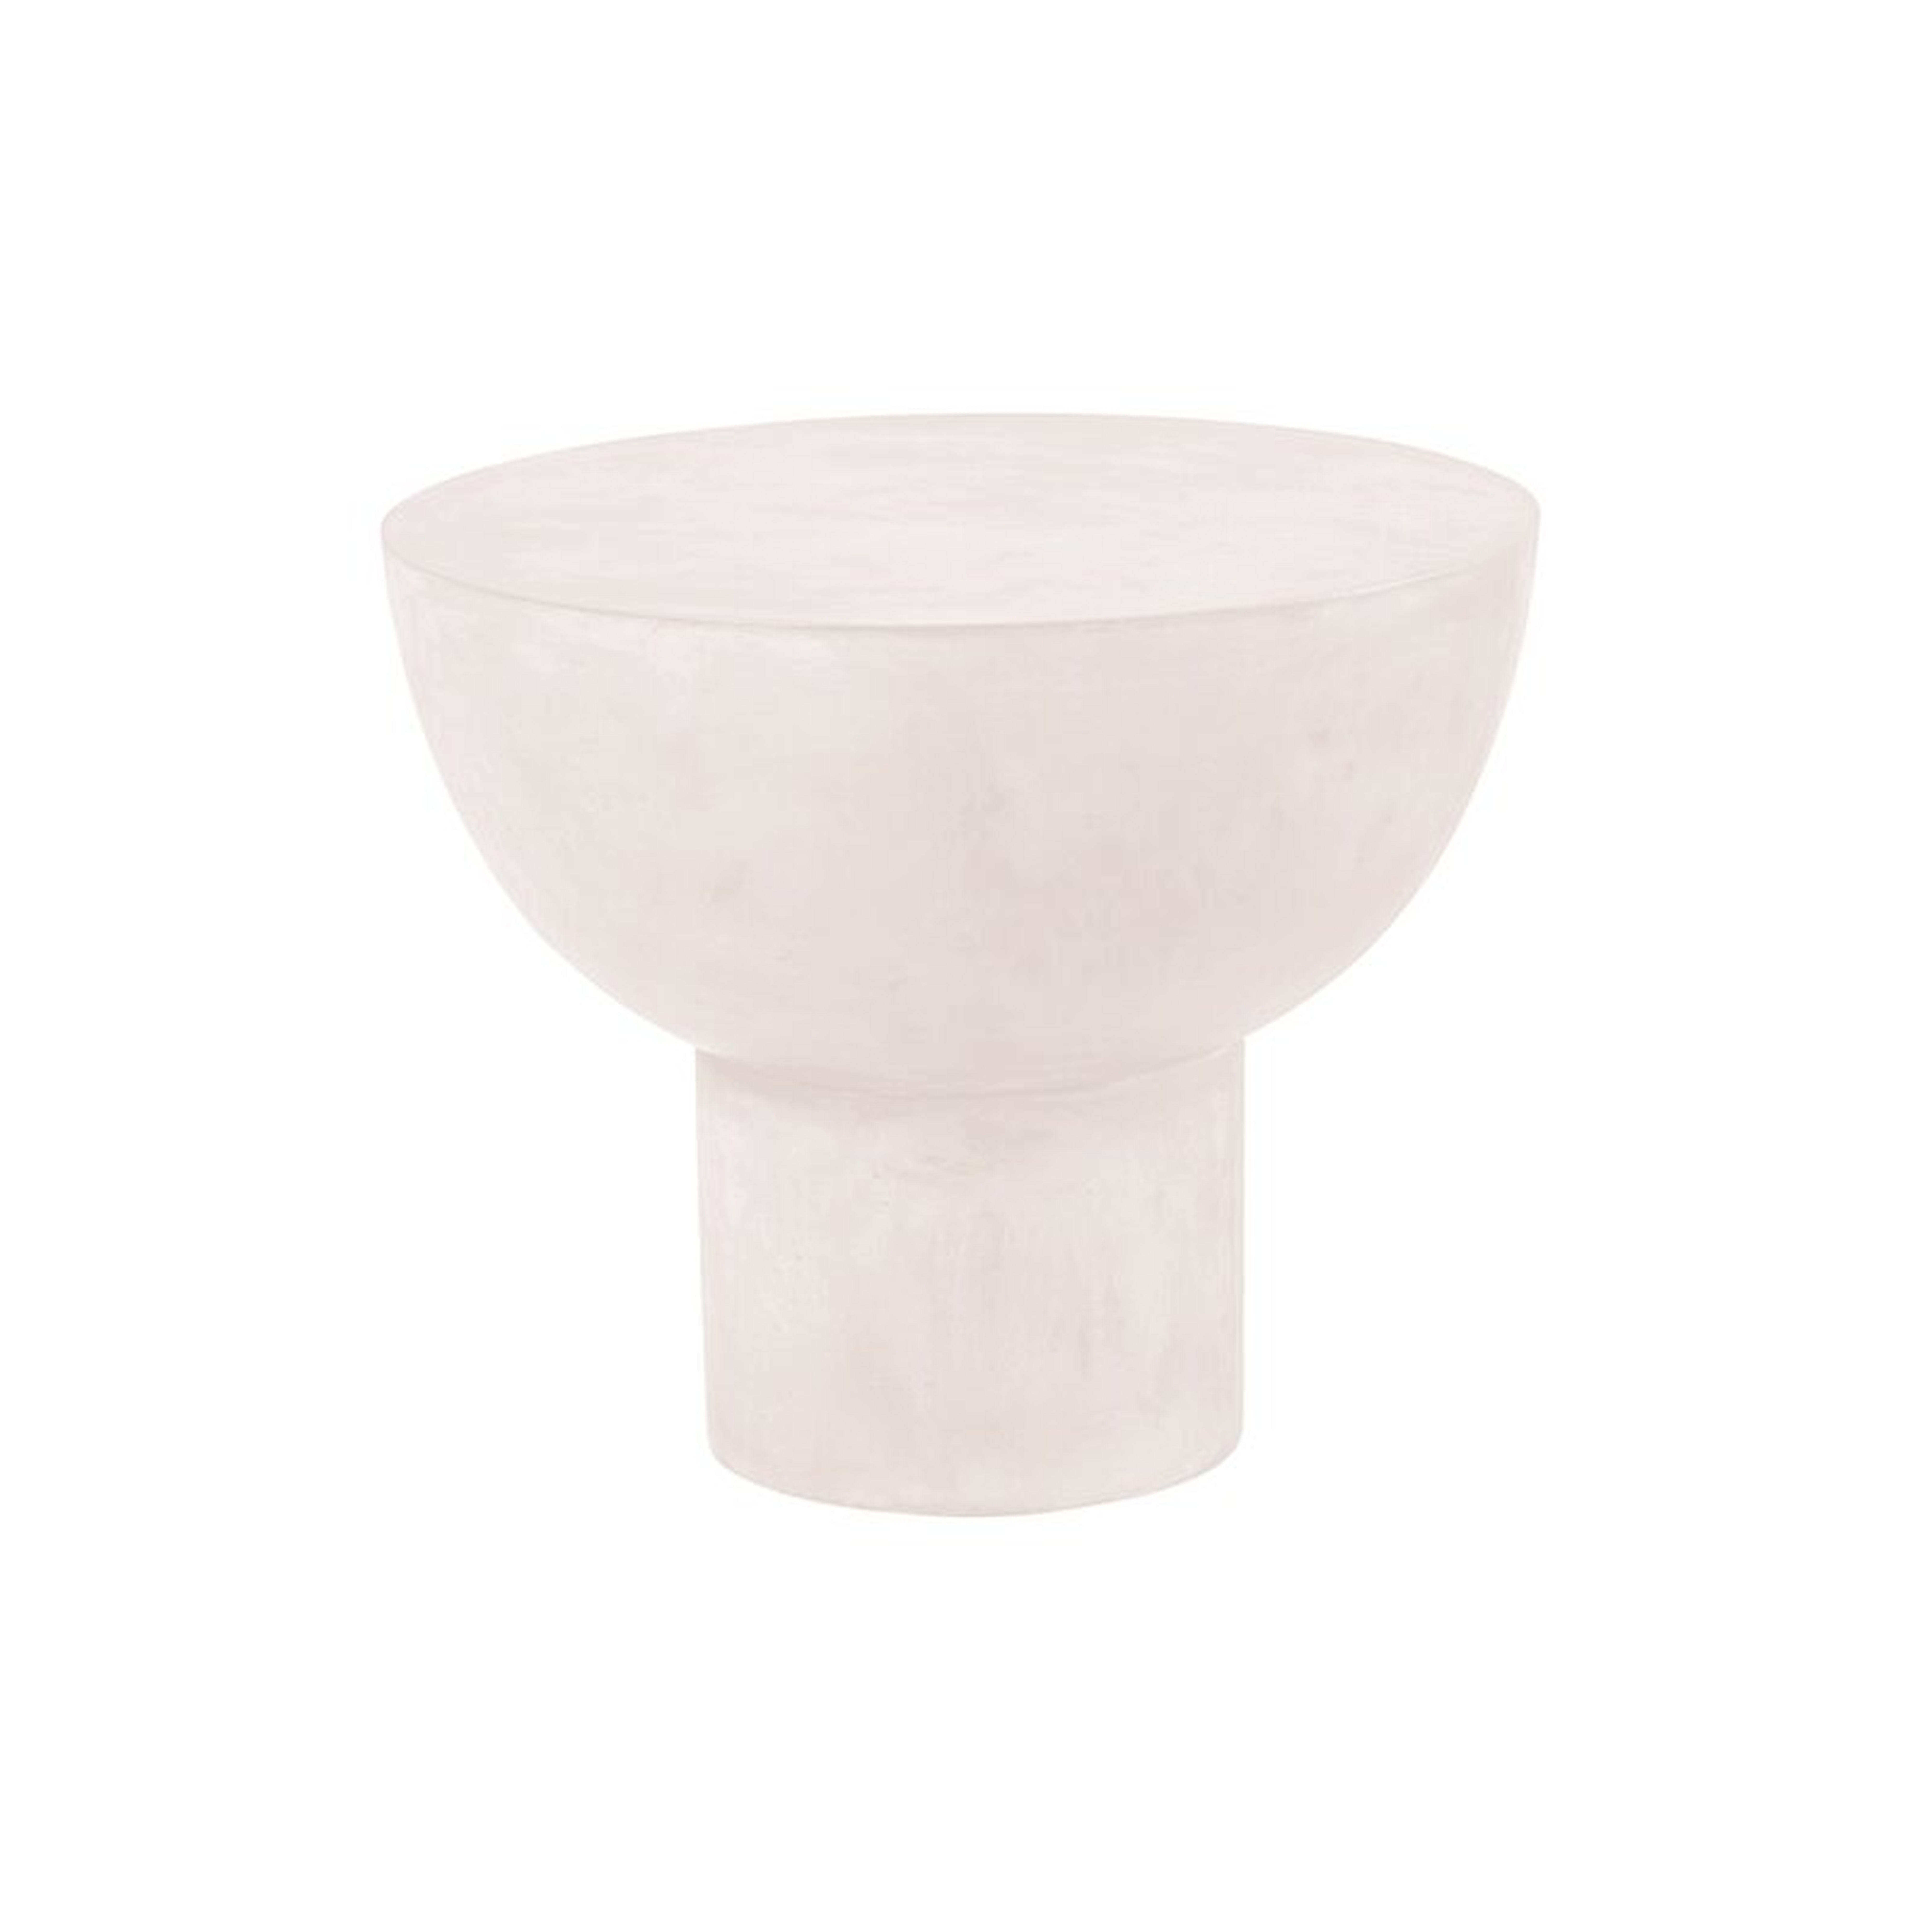 Seasonal Living Perpetual Concrete Side Table Color: Ivory White, Table Size: 21" - Perigold